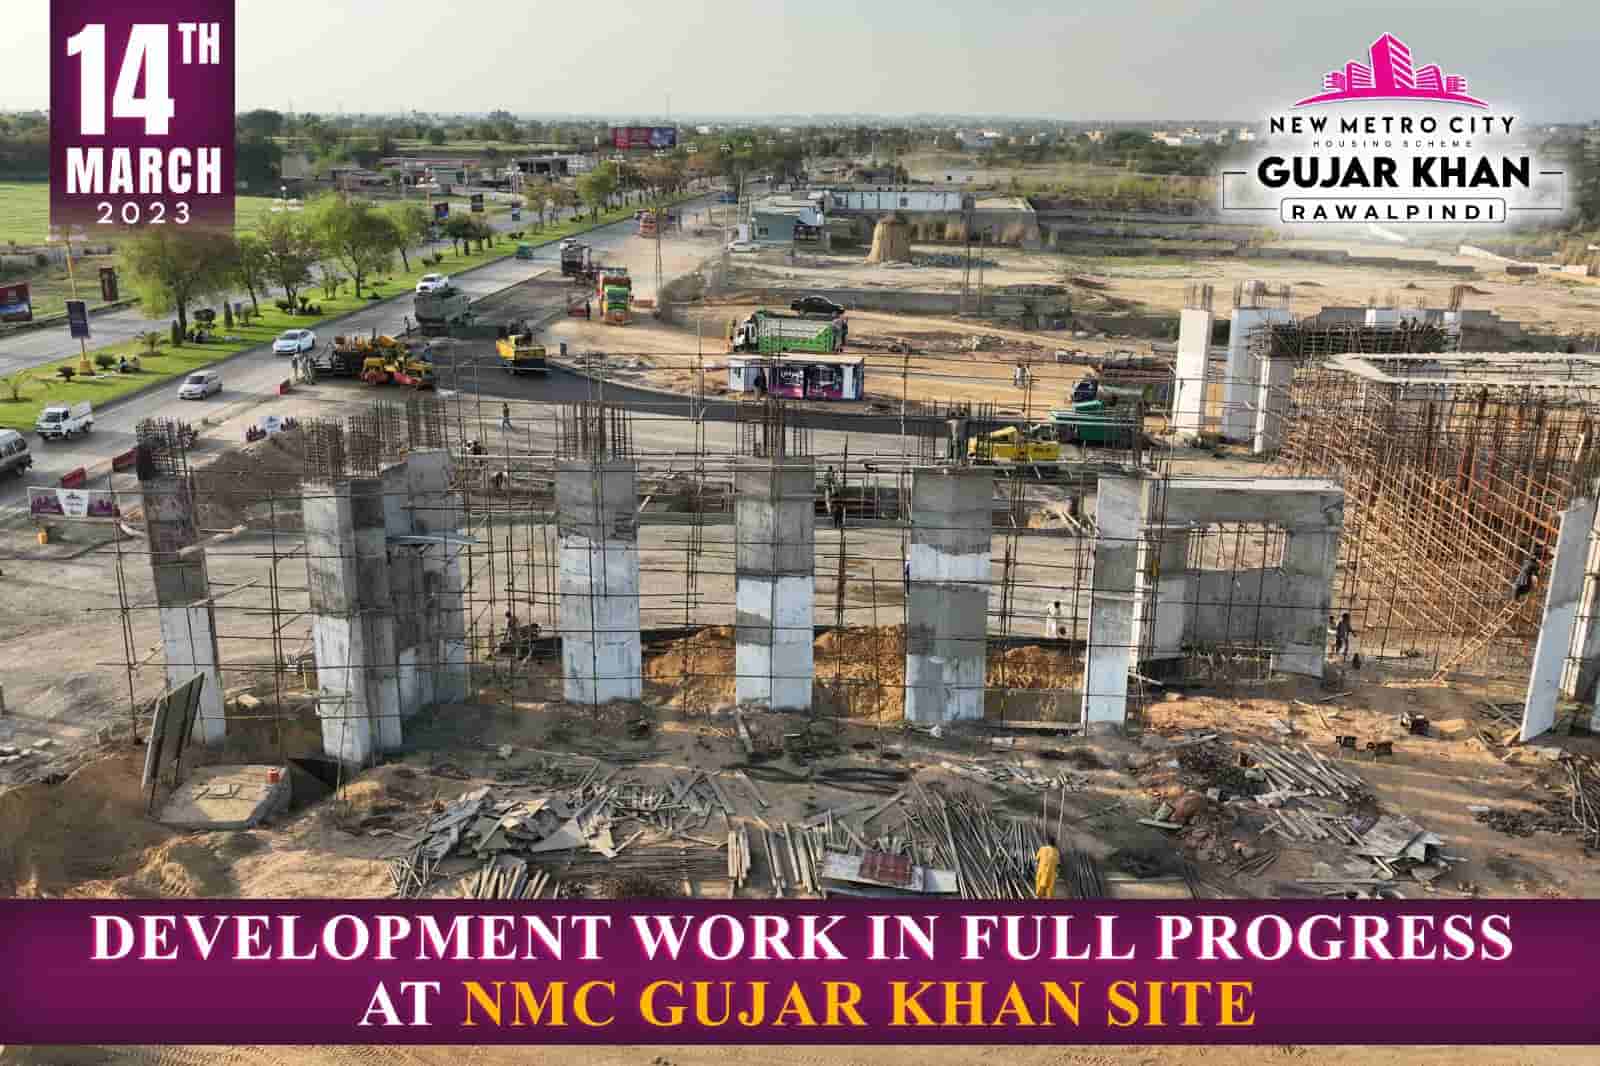 New Metro City Gujar Khan development work